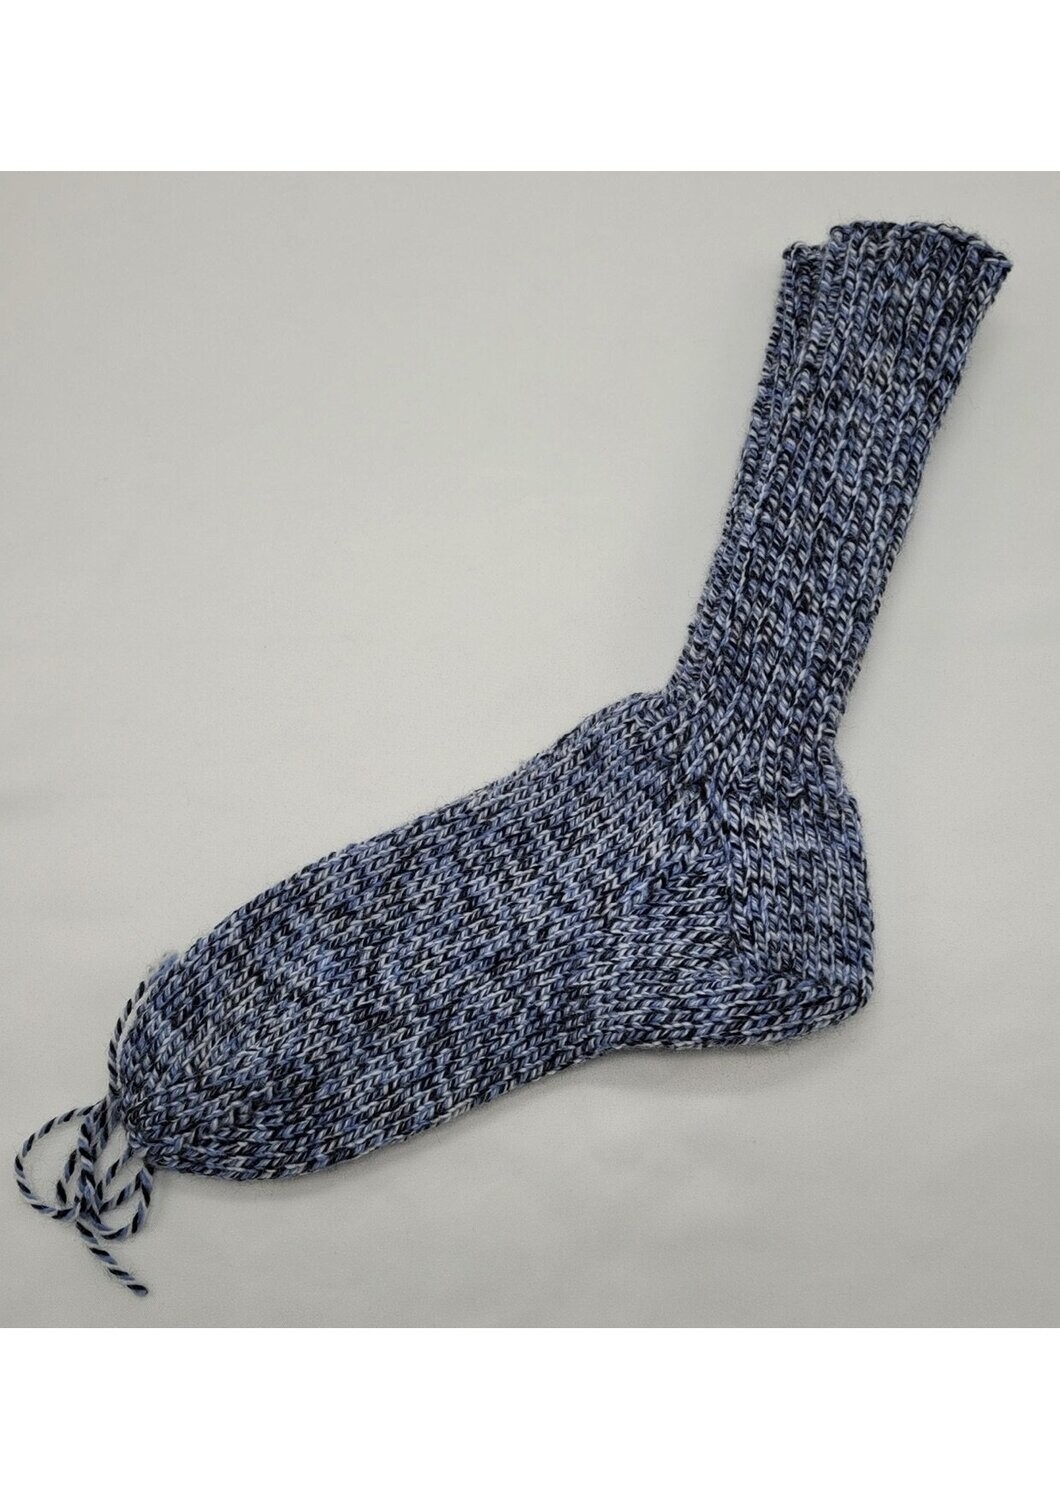 Noorse sokken blauw/wit/zwart